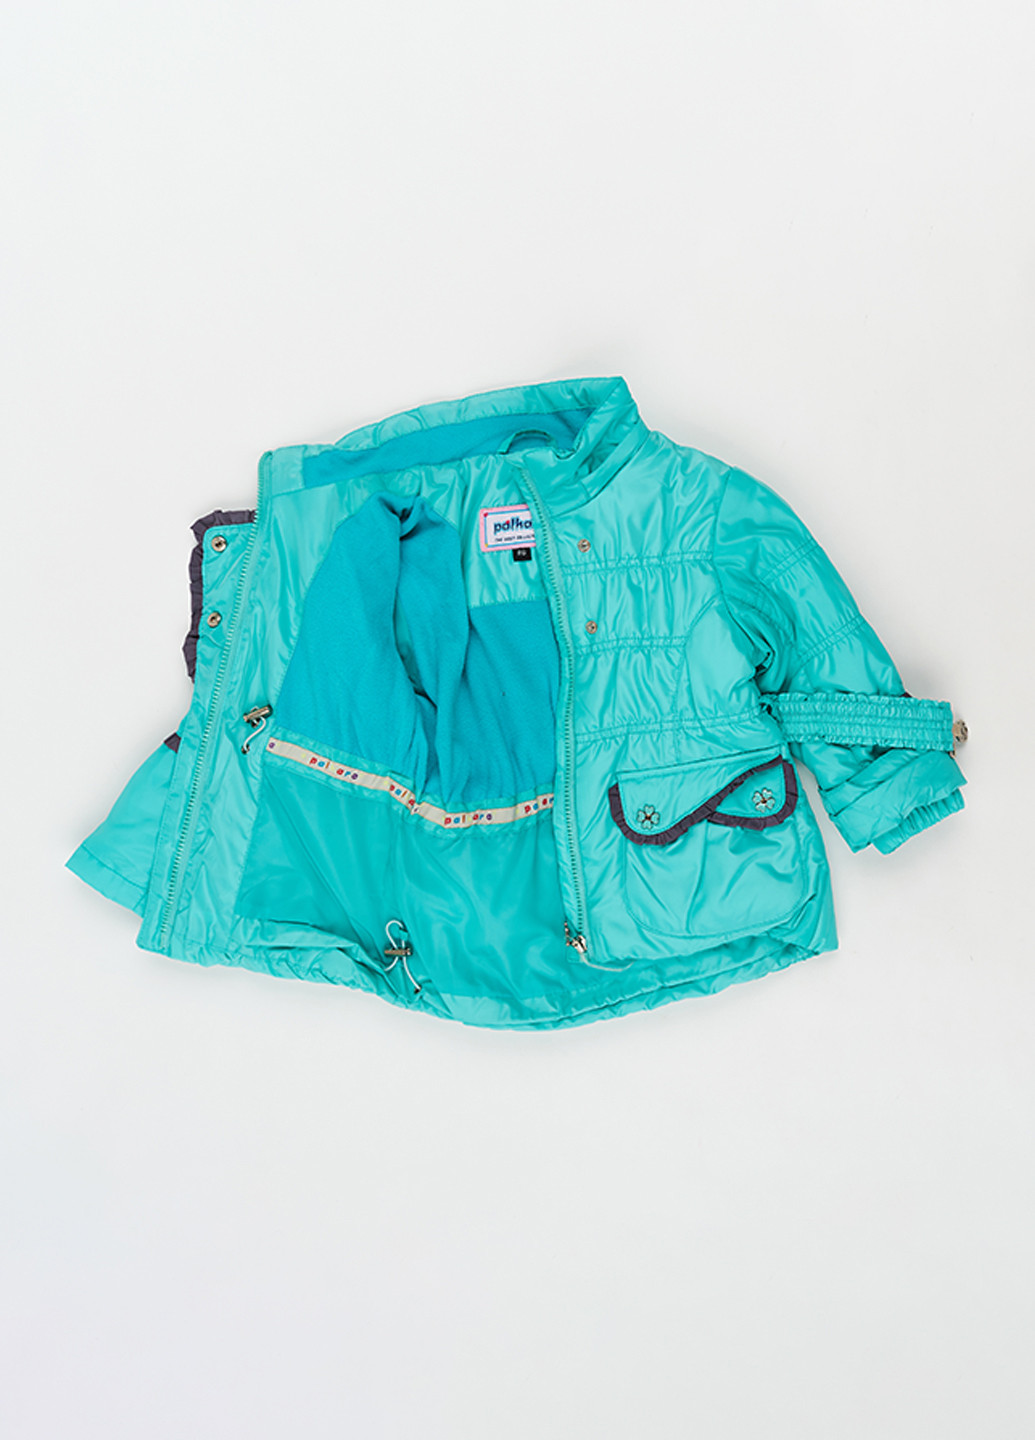 Светло-бирюзовый комплект (куртка, полукомбинезон) Palhare